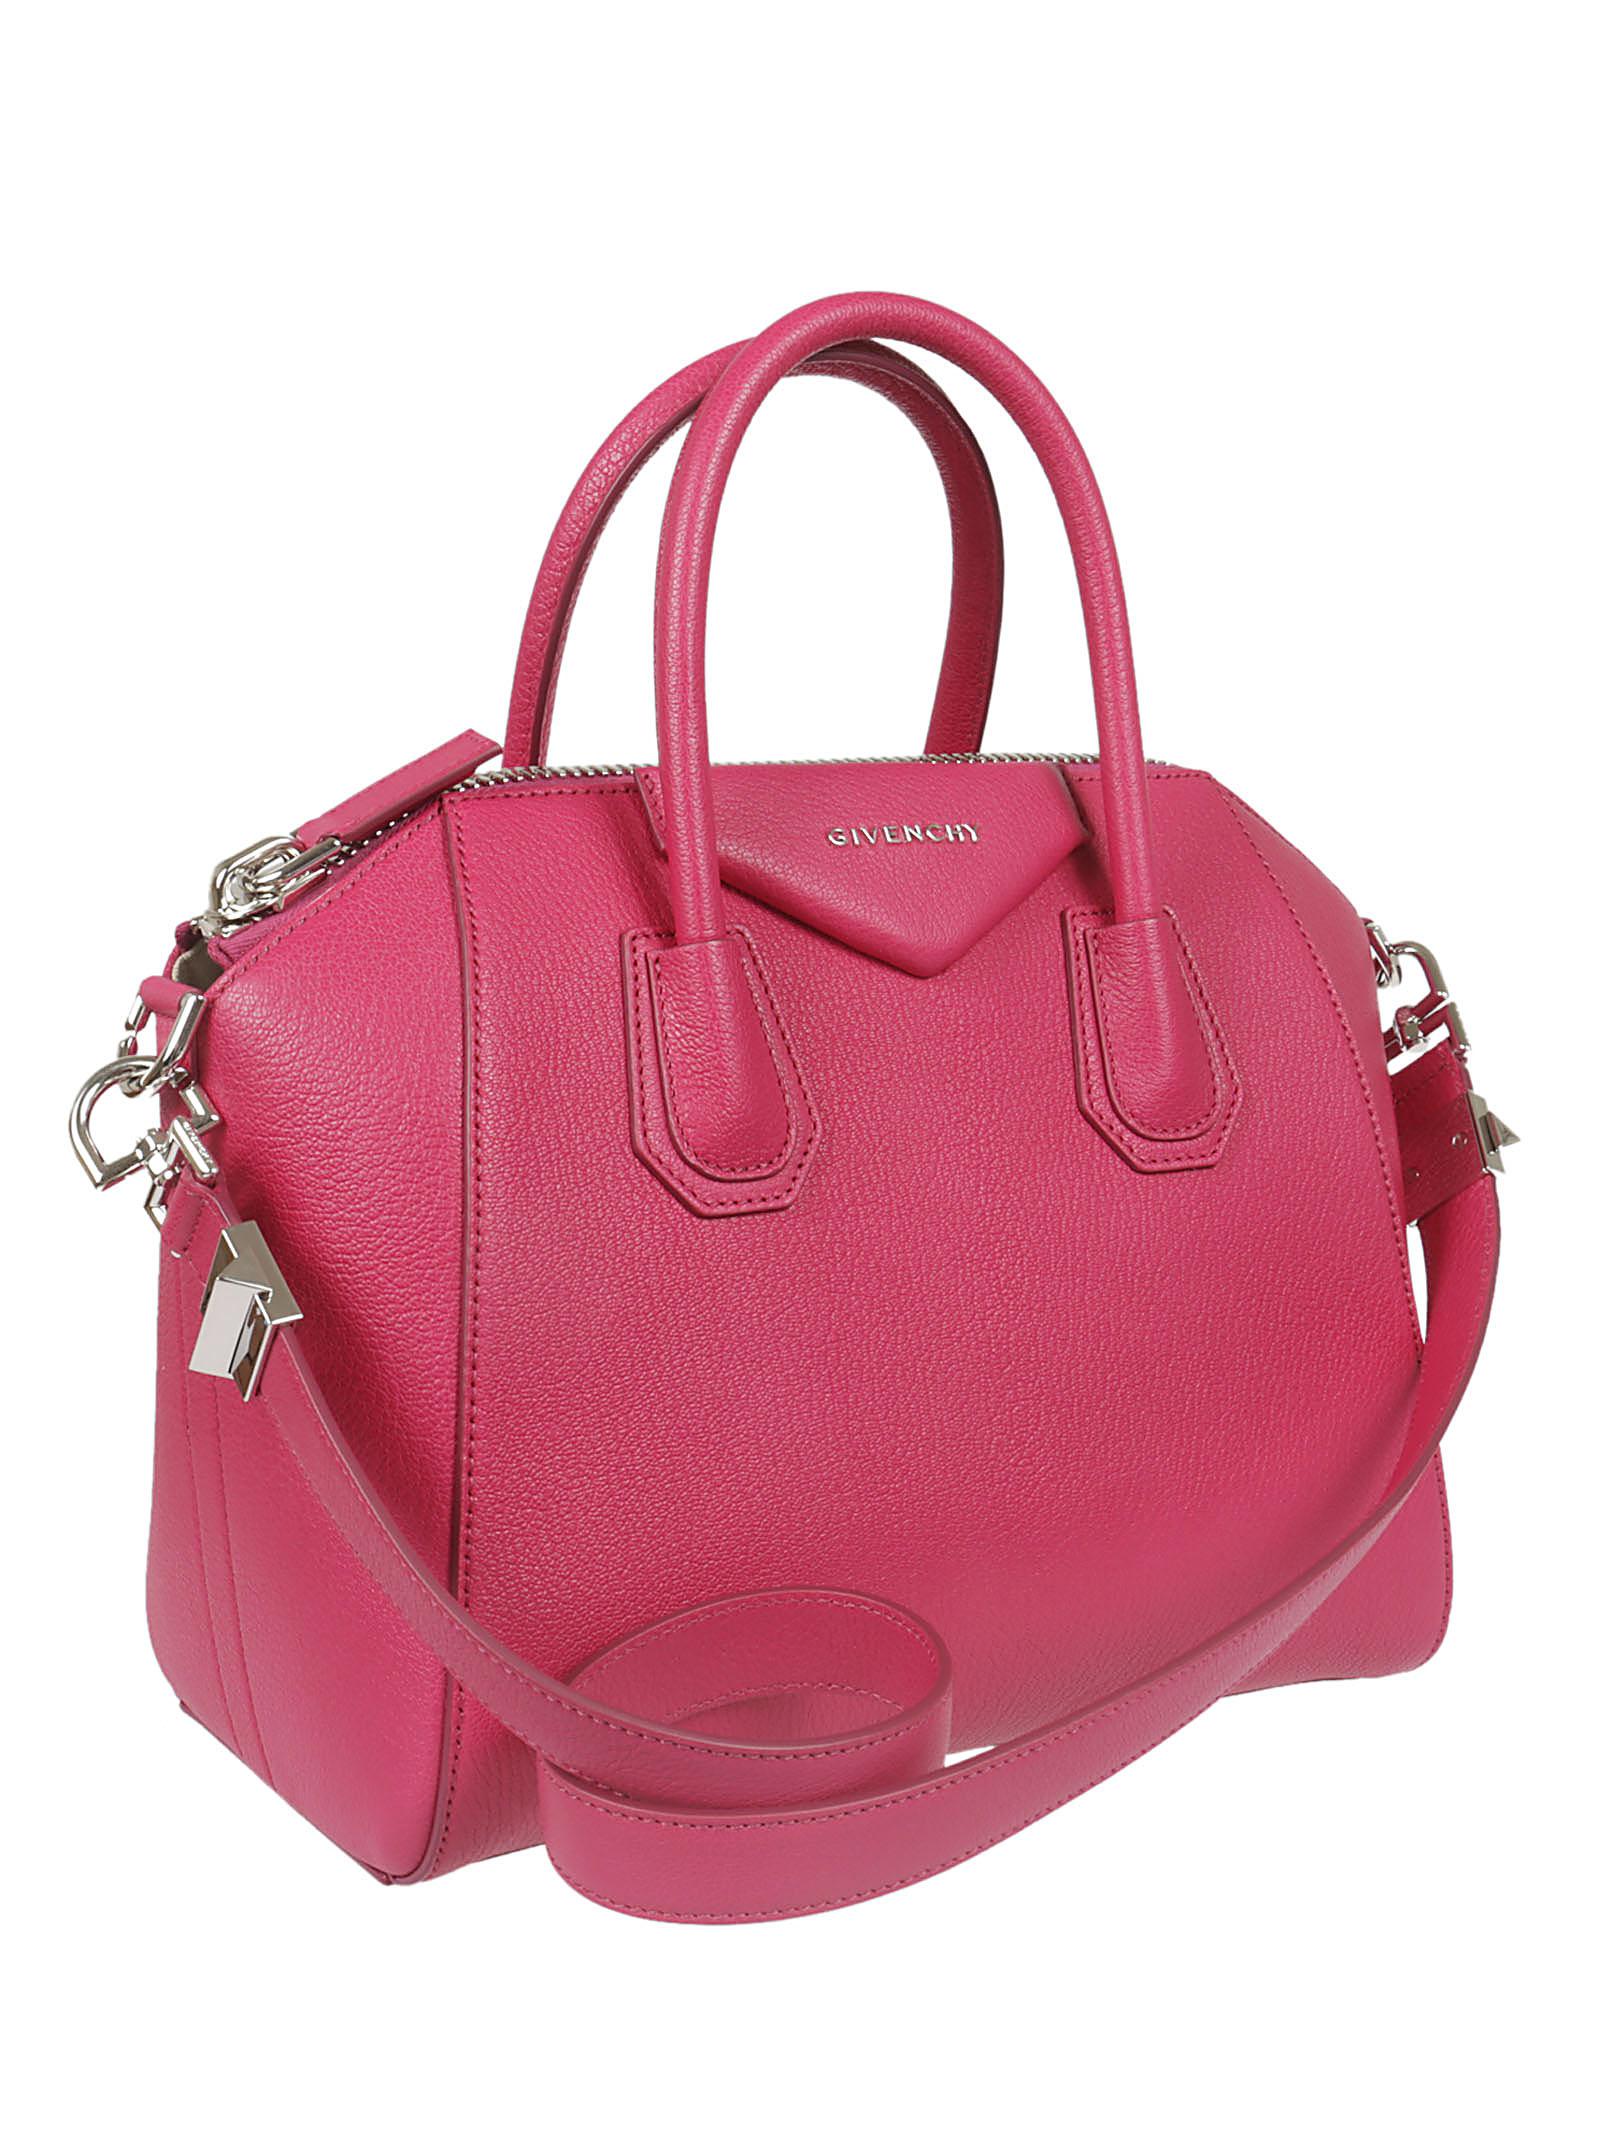 Givenchy Antigona Small Bag - Lyst